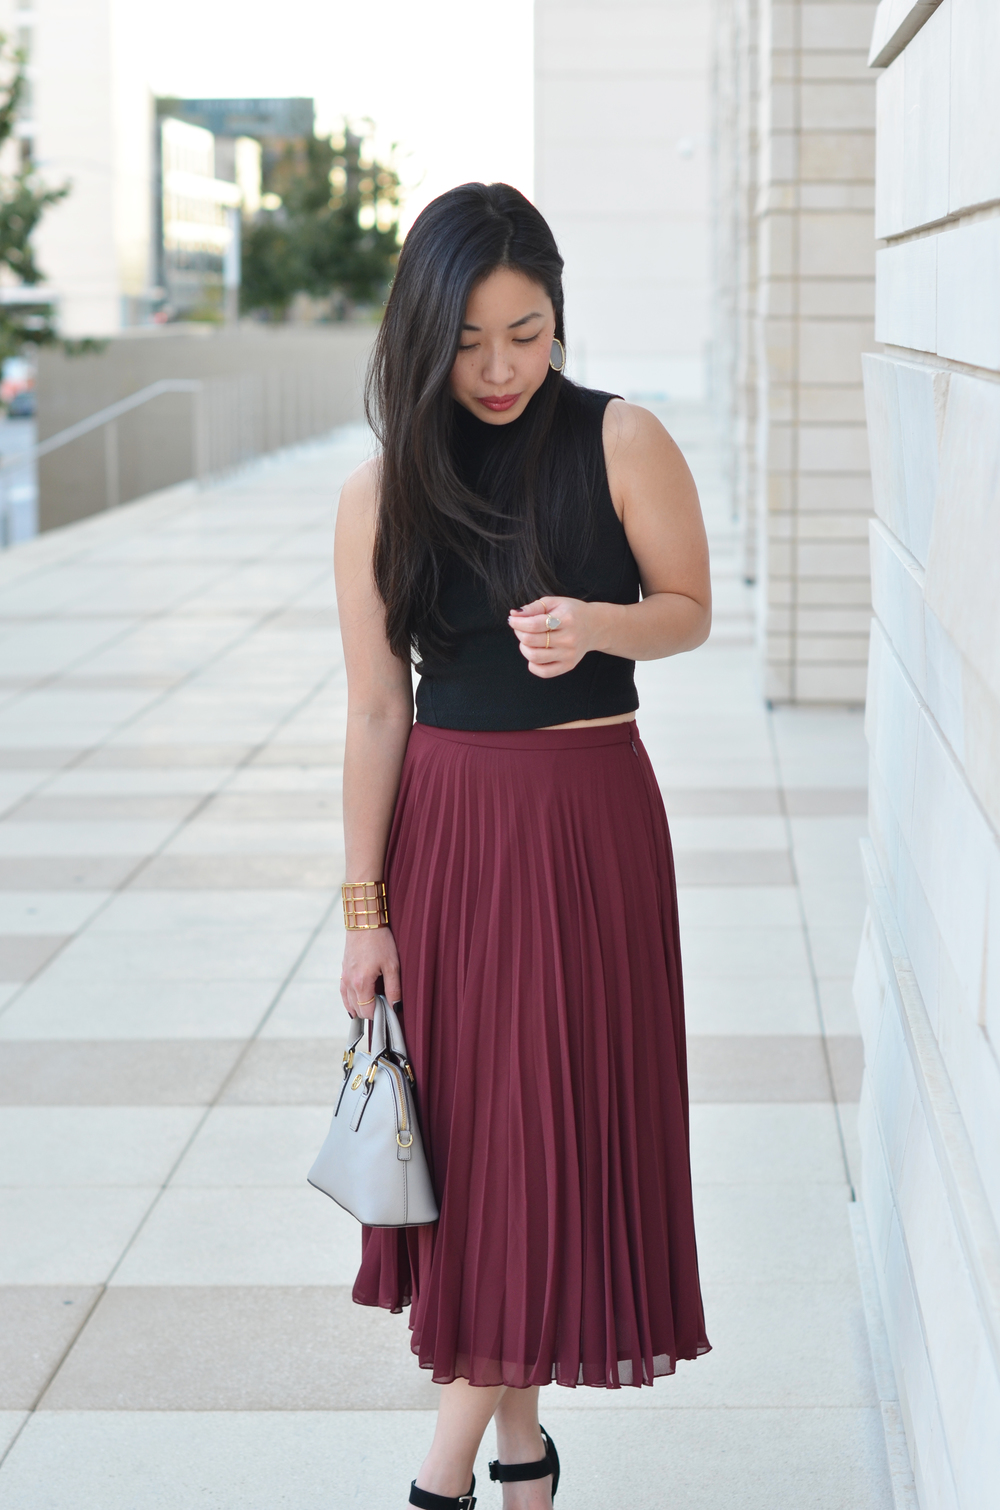 the burgundy pleated skirt & crop top — janna doan